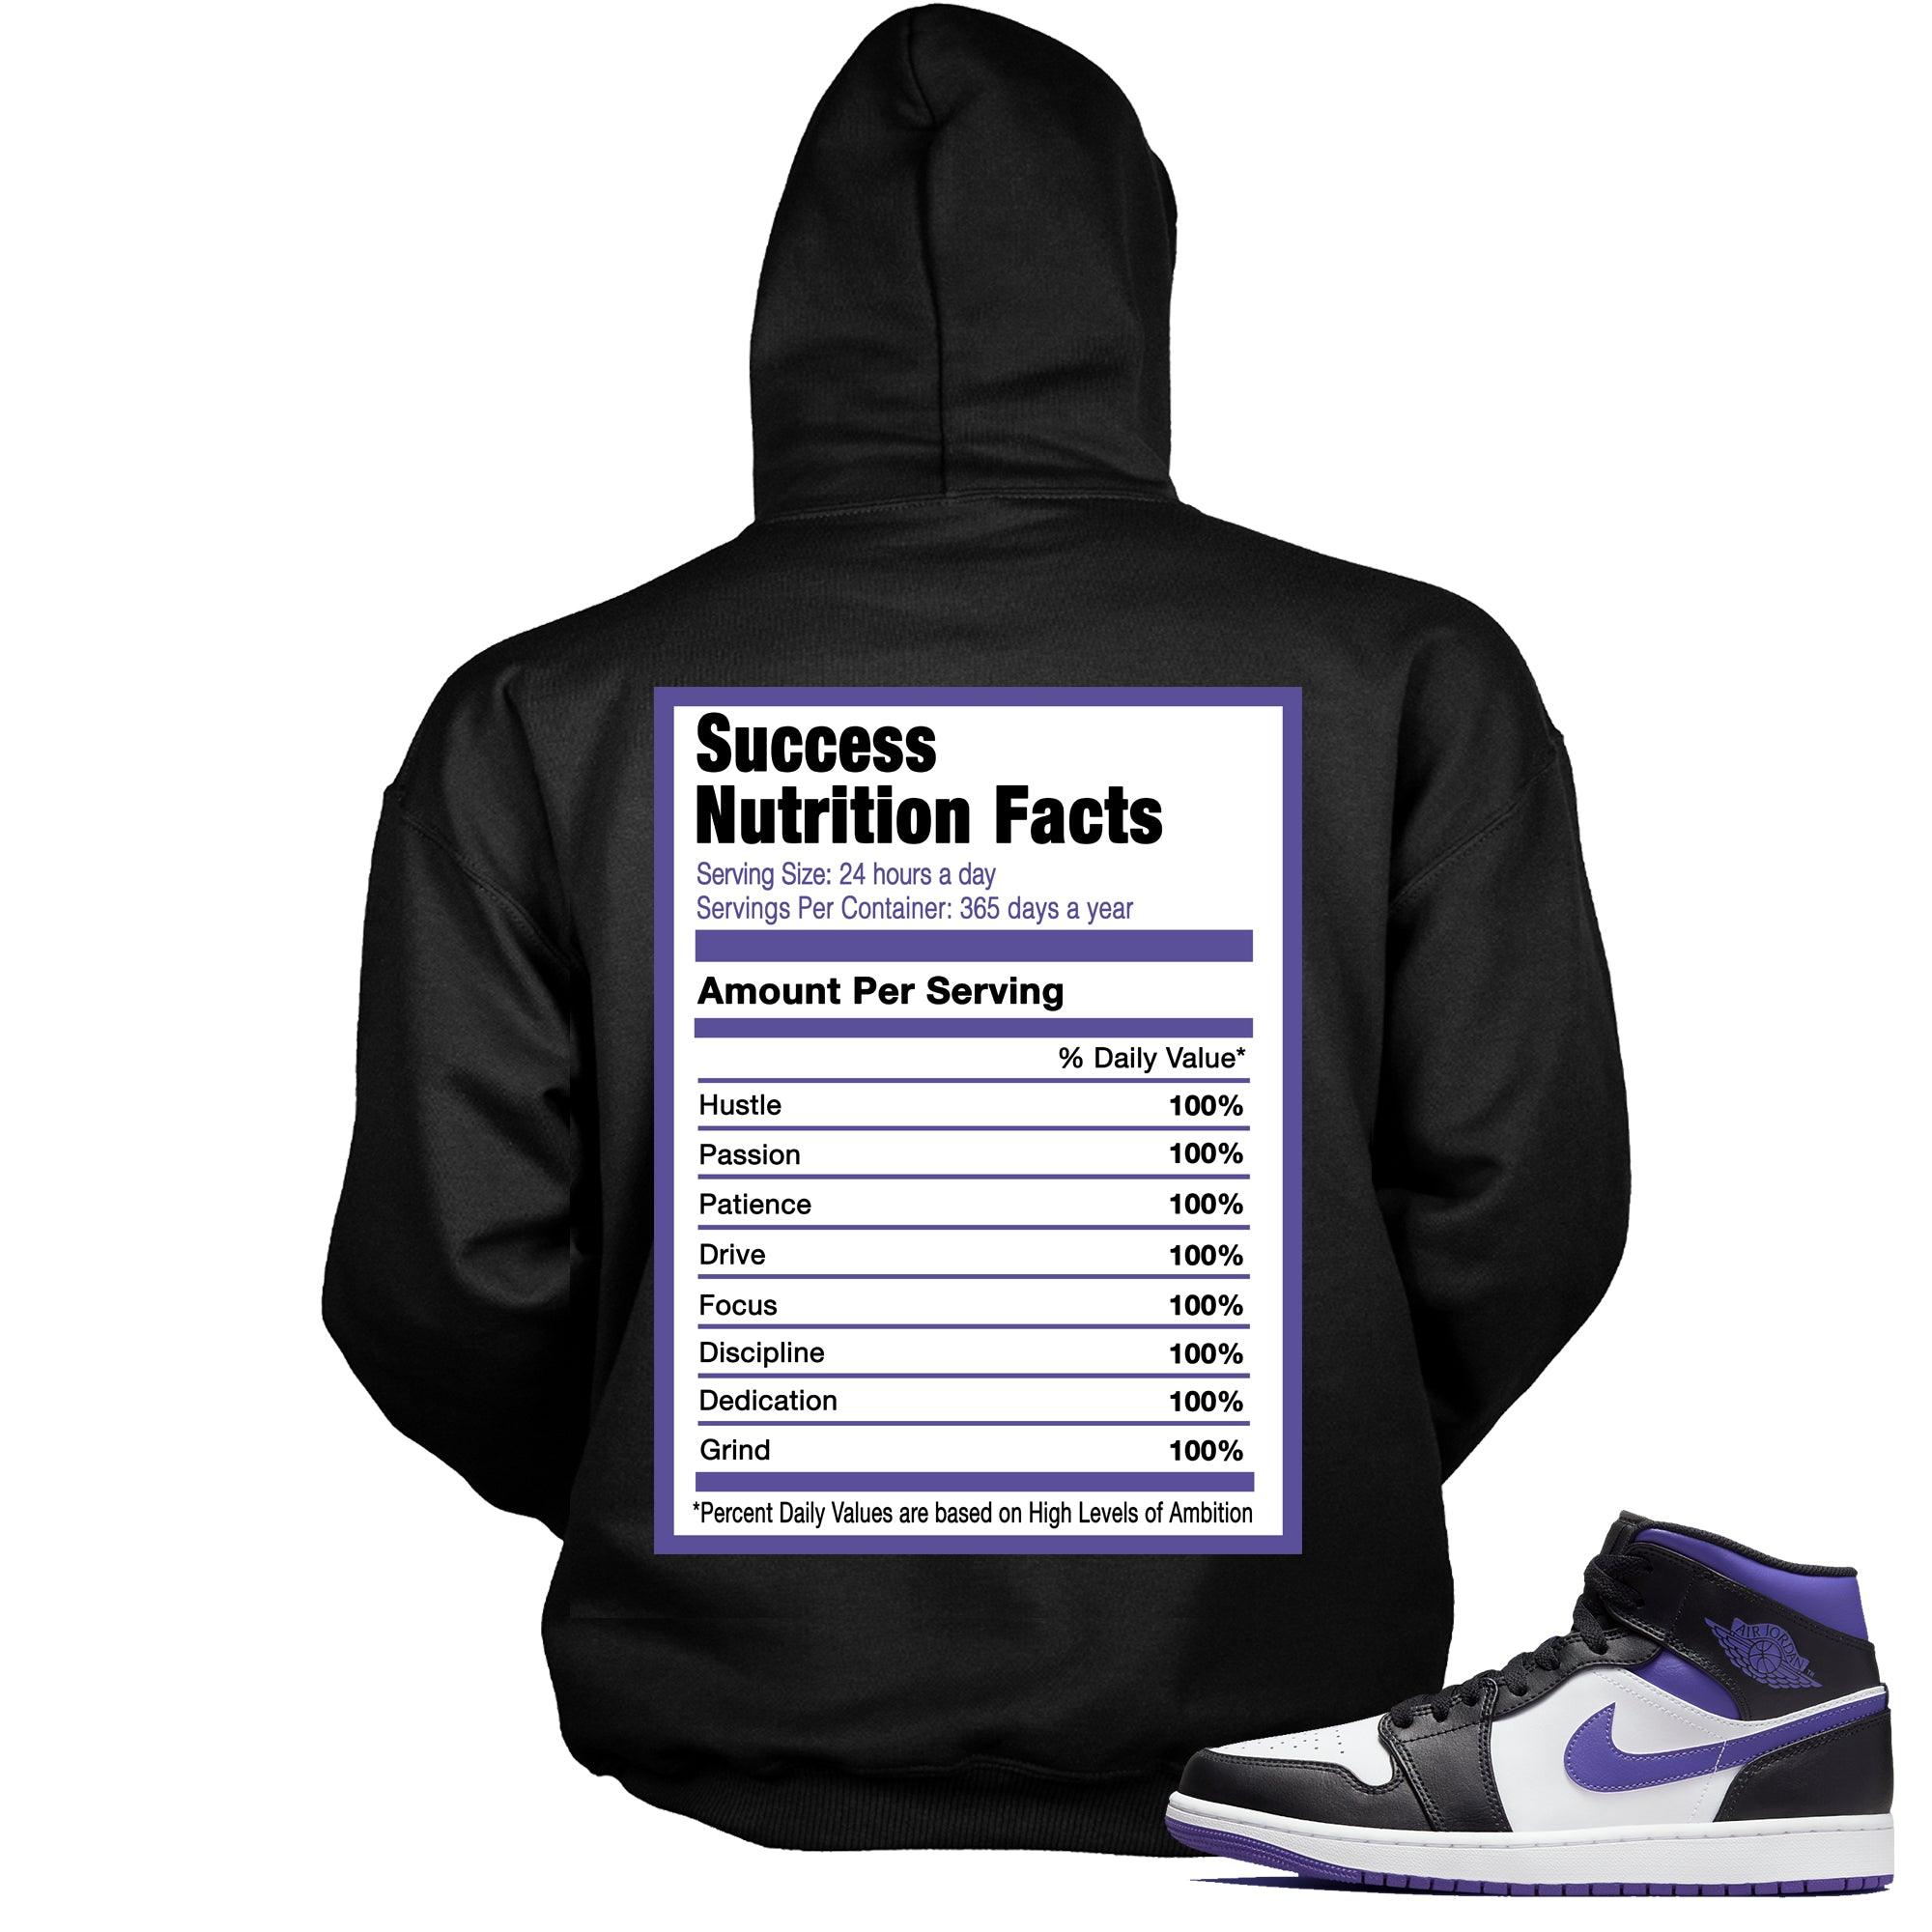 Success Nutrition Sneaker Sweatshirt AJ 1 Mid White Black Purple photo